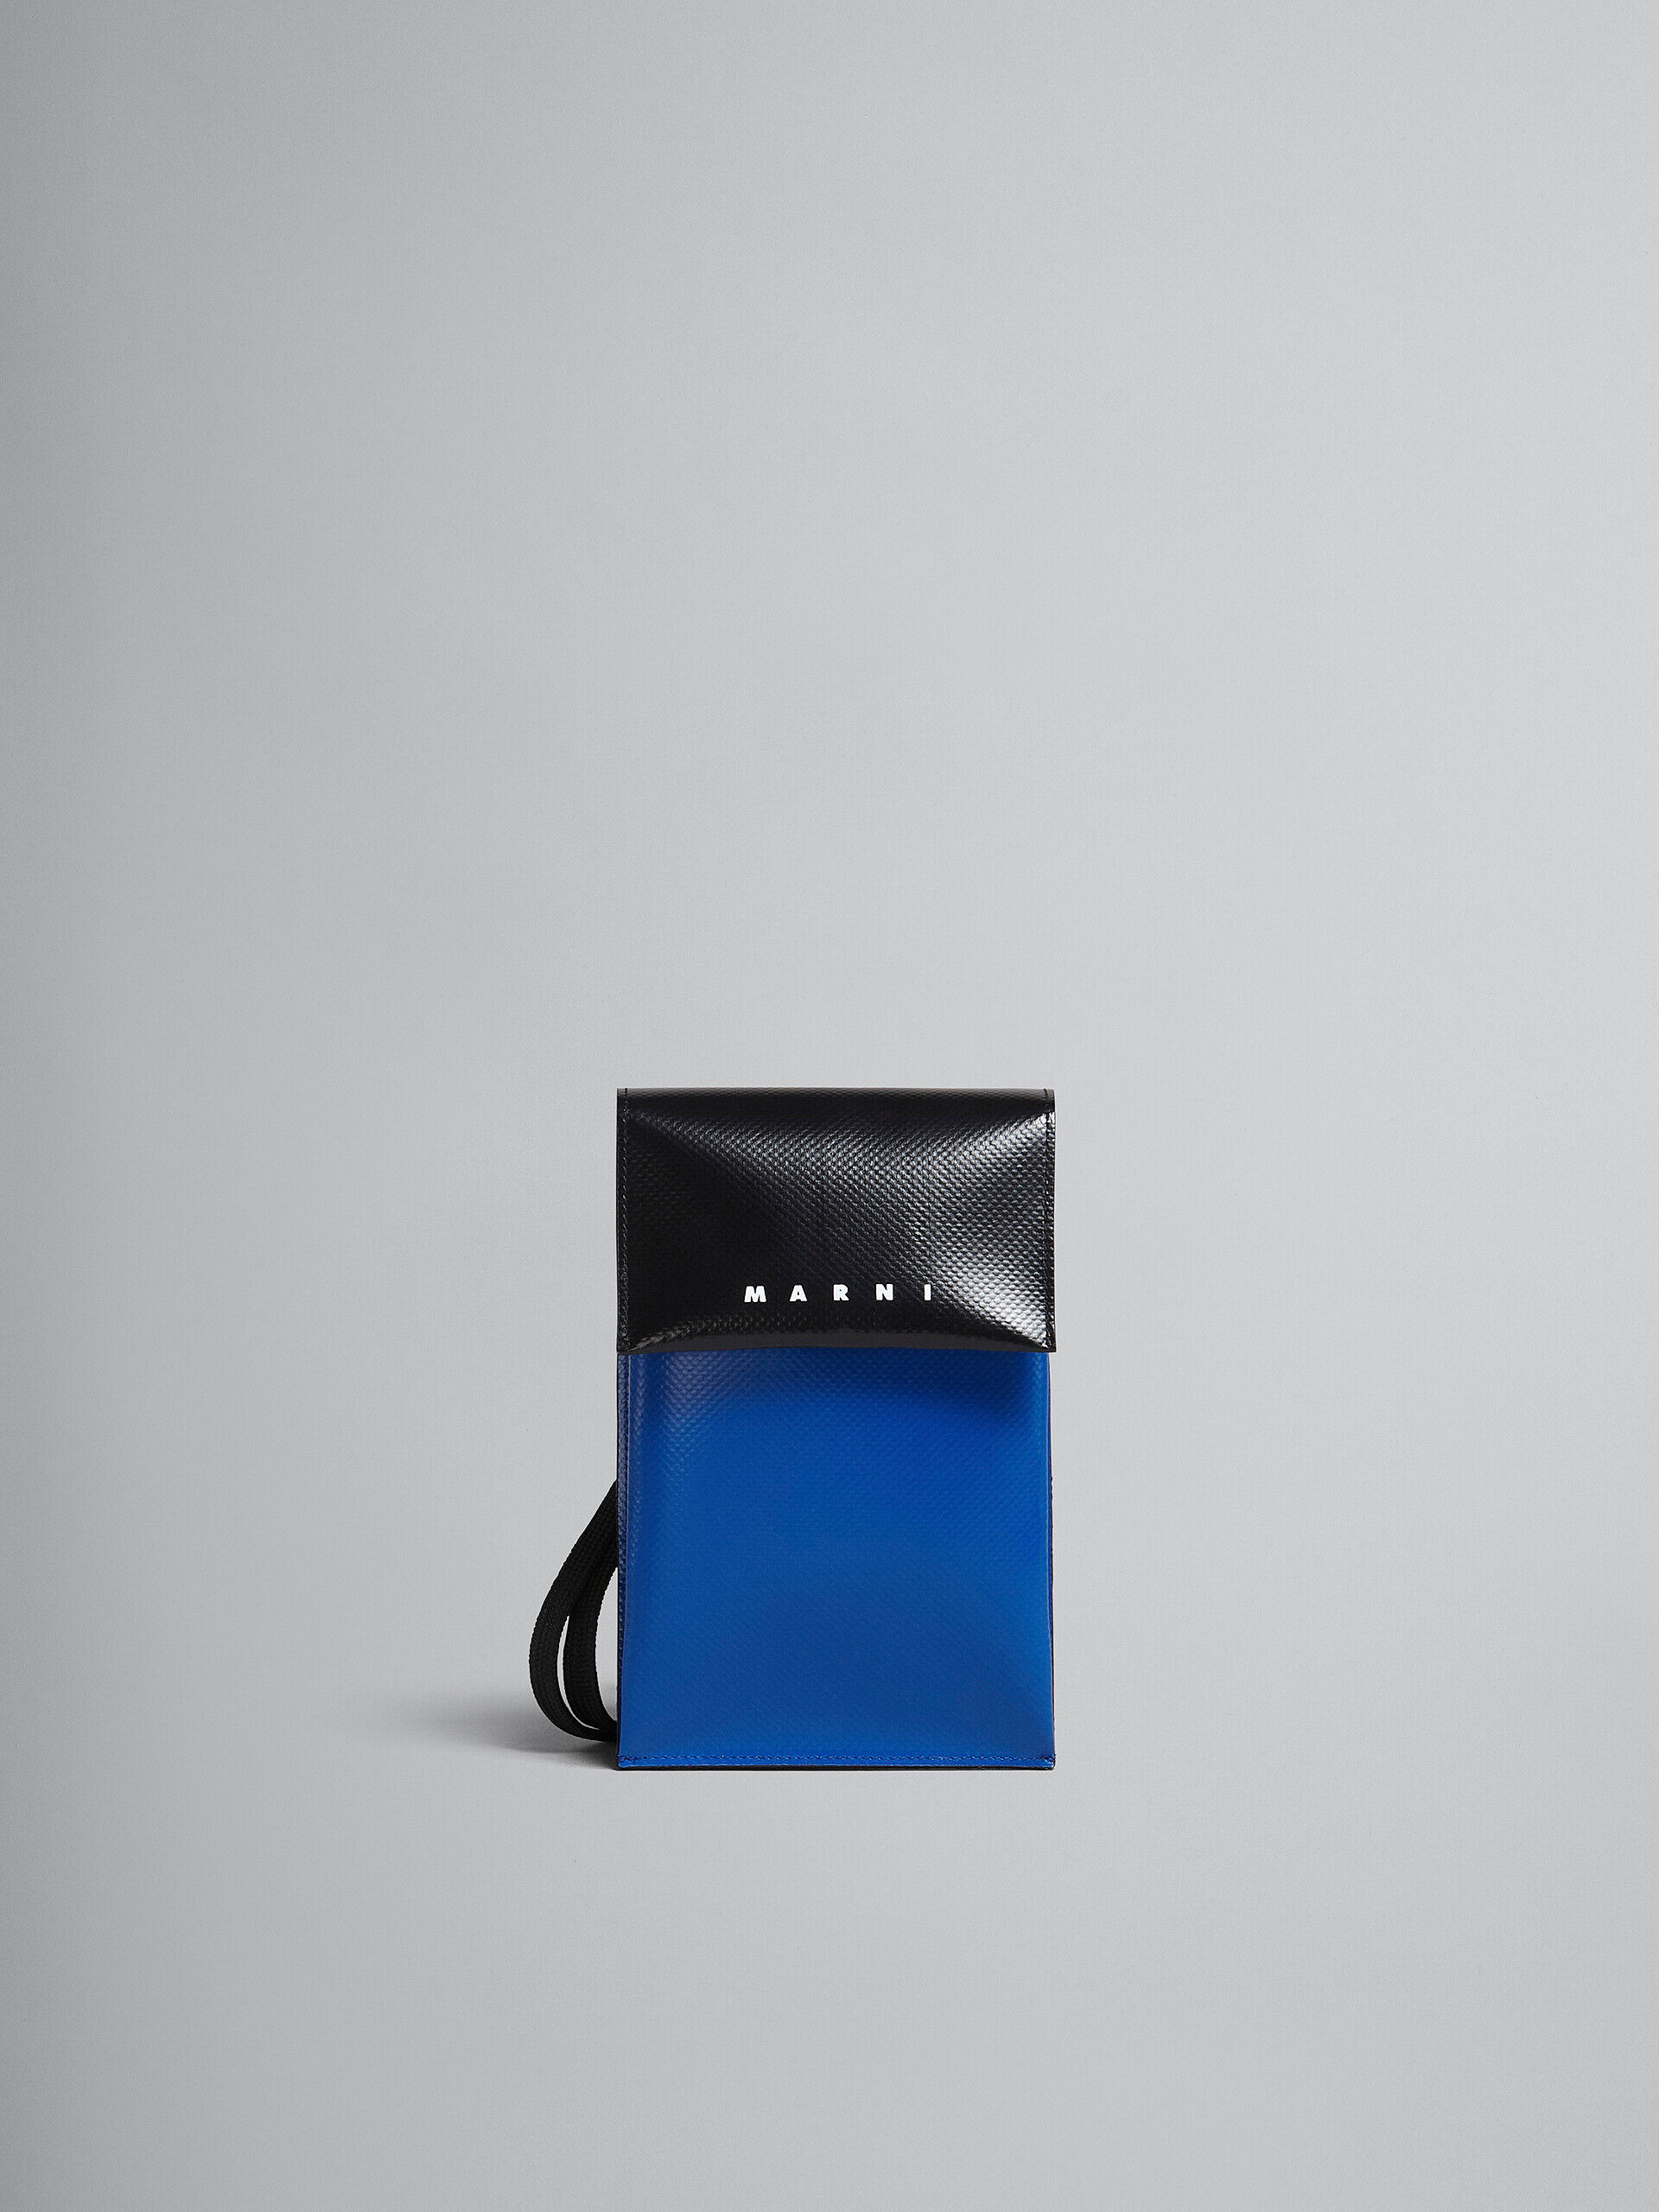 Tribeca blue and black phone case | Marni